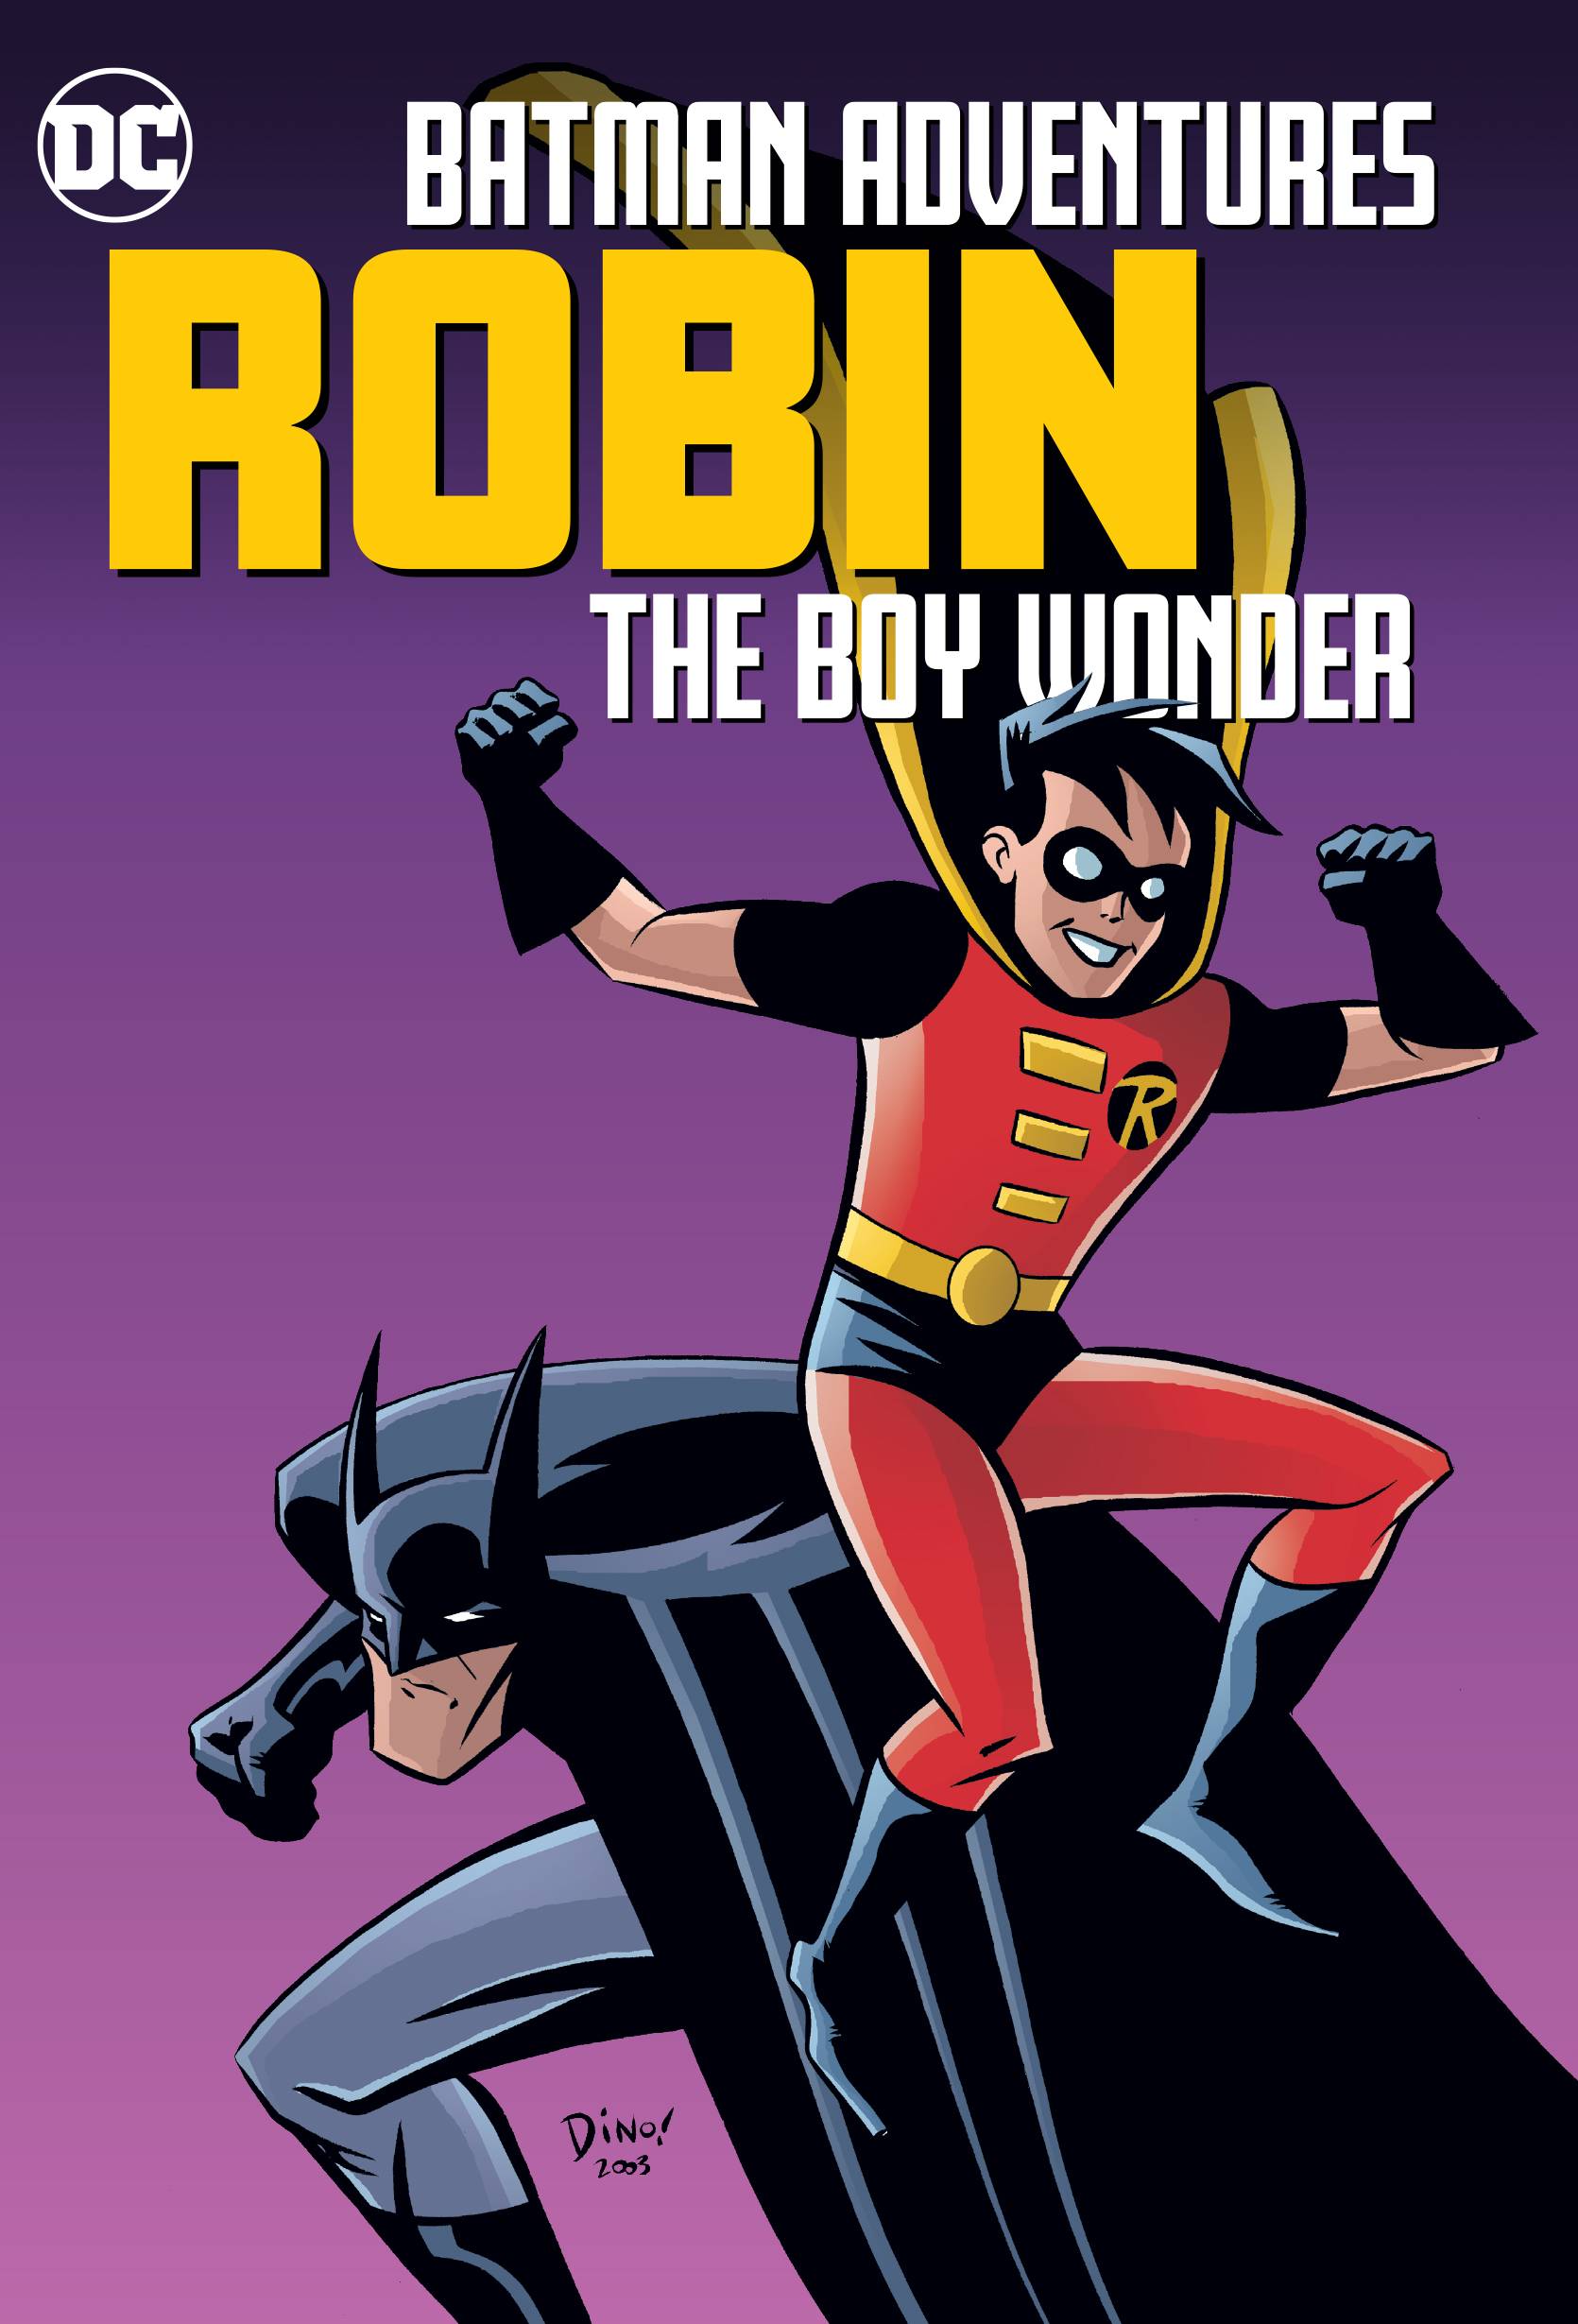 BATMAN ADVENTURES ROBIN THE BOY WONDER TP